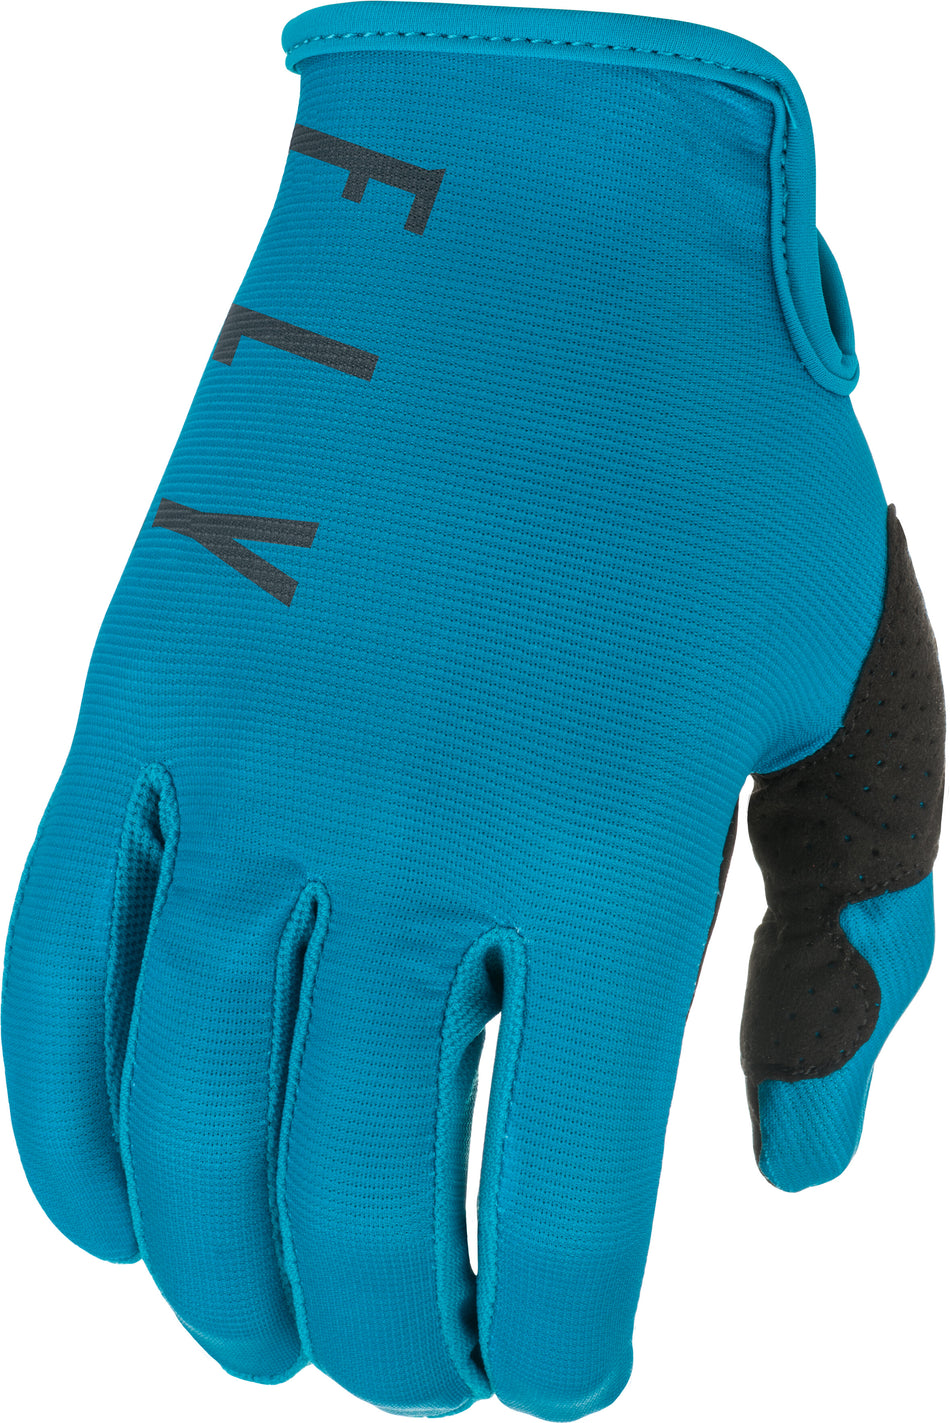 FLY RACING Lite Gloves Blue/Grey Sz 10 374-71110